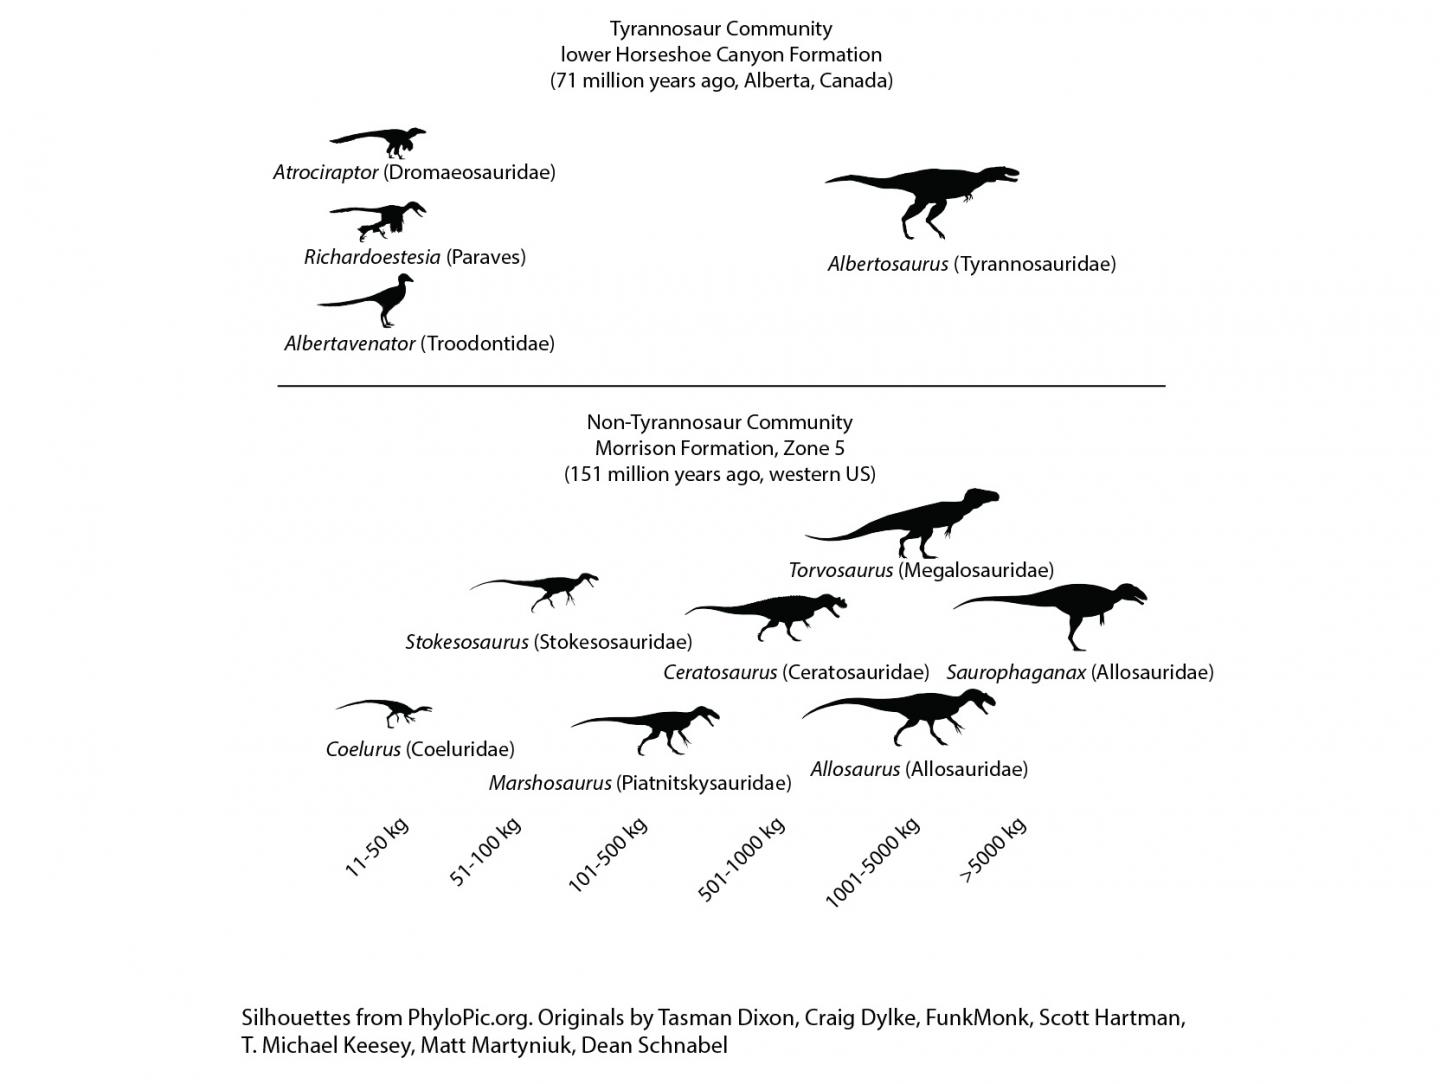 Size Distribution of Carnivorous Dinosaurs